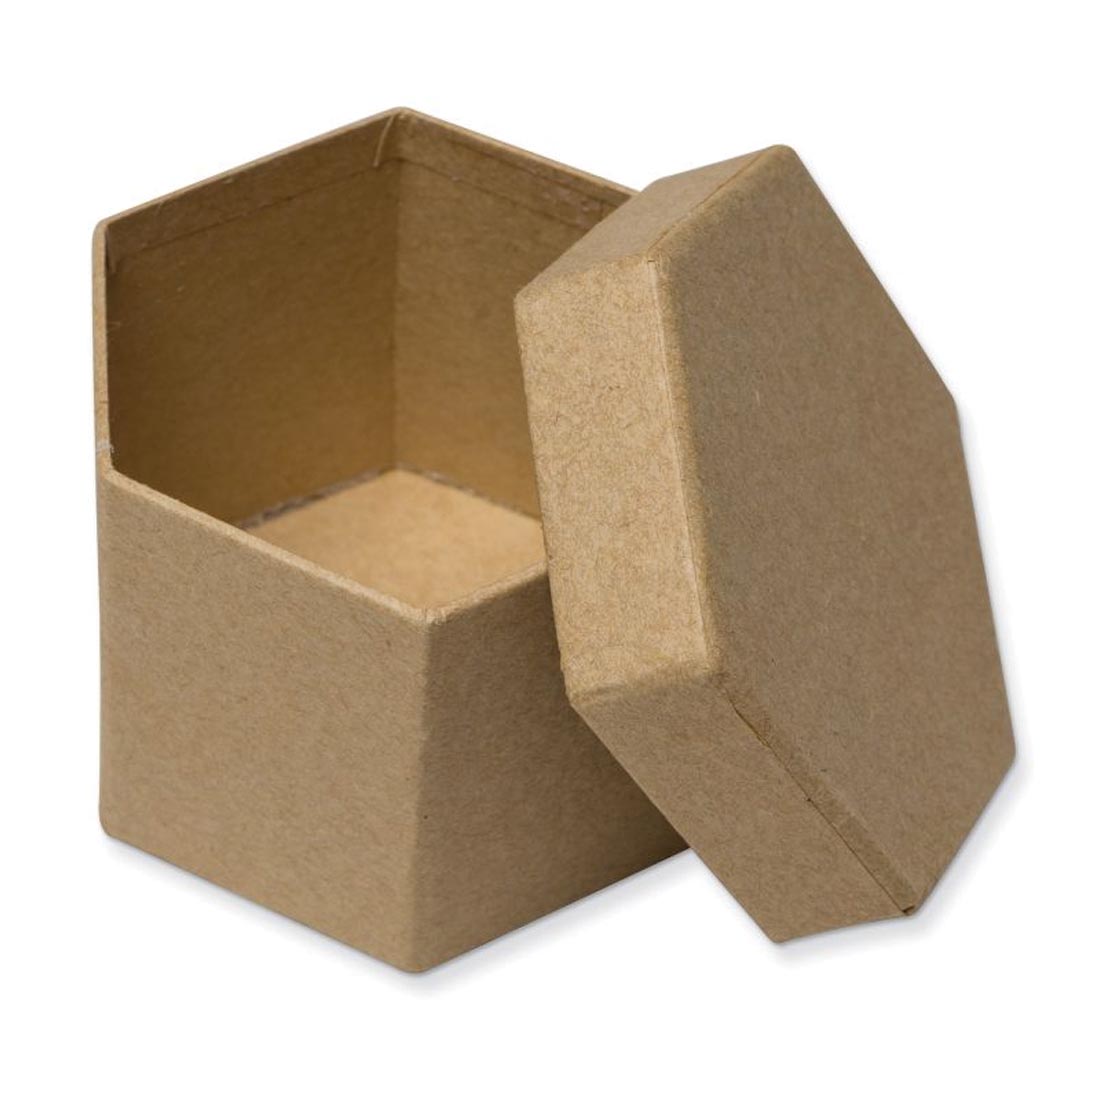 Creativity Street Papier Mache Hexagon Box with lid off